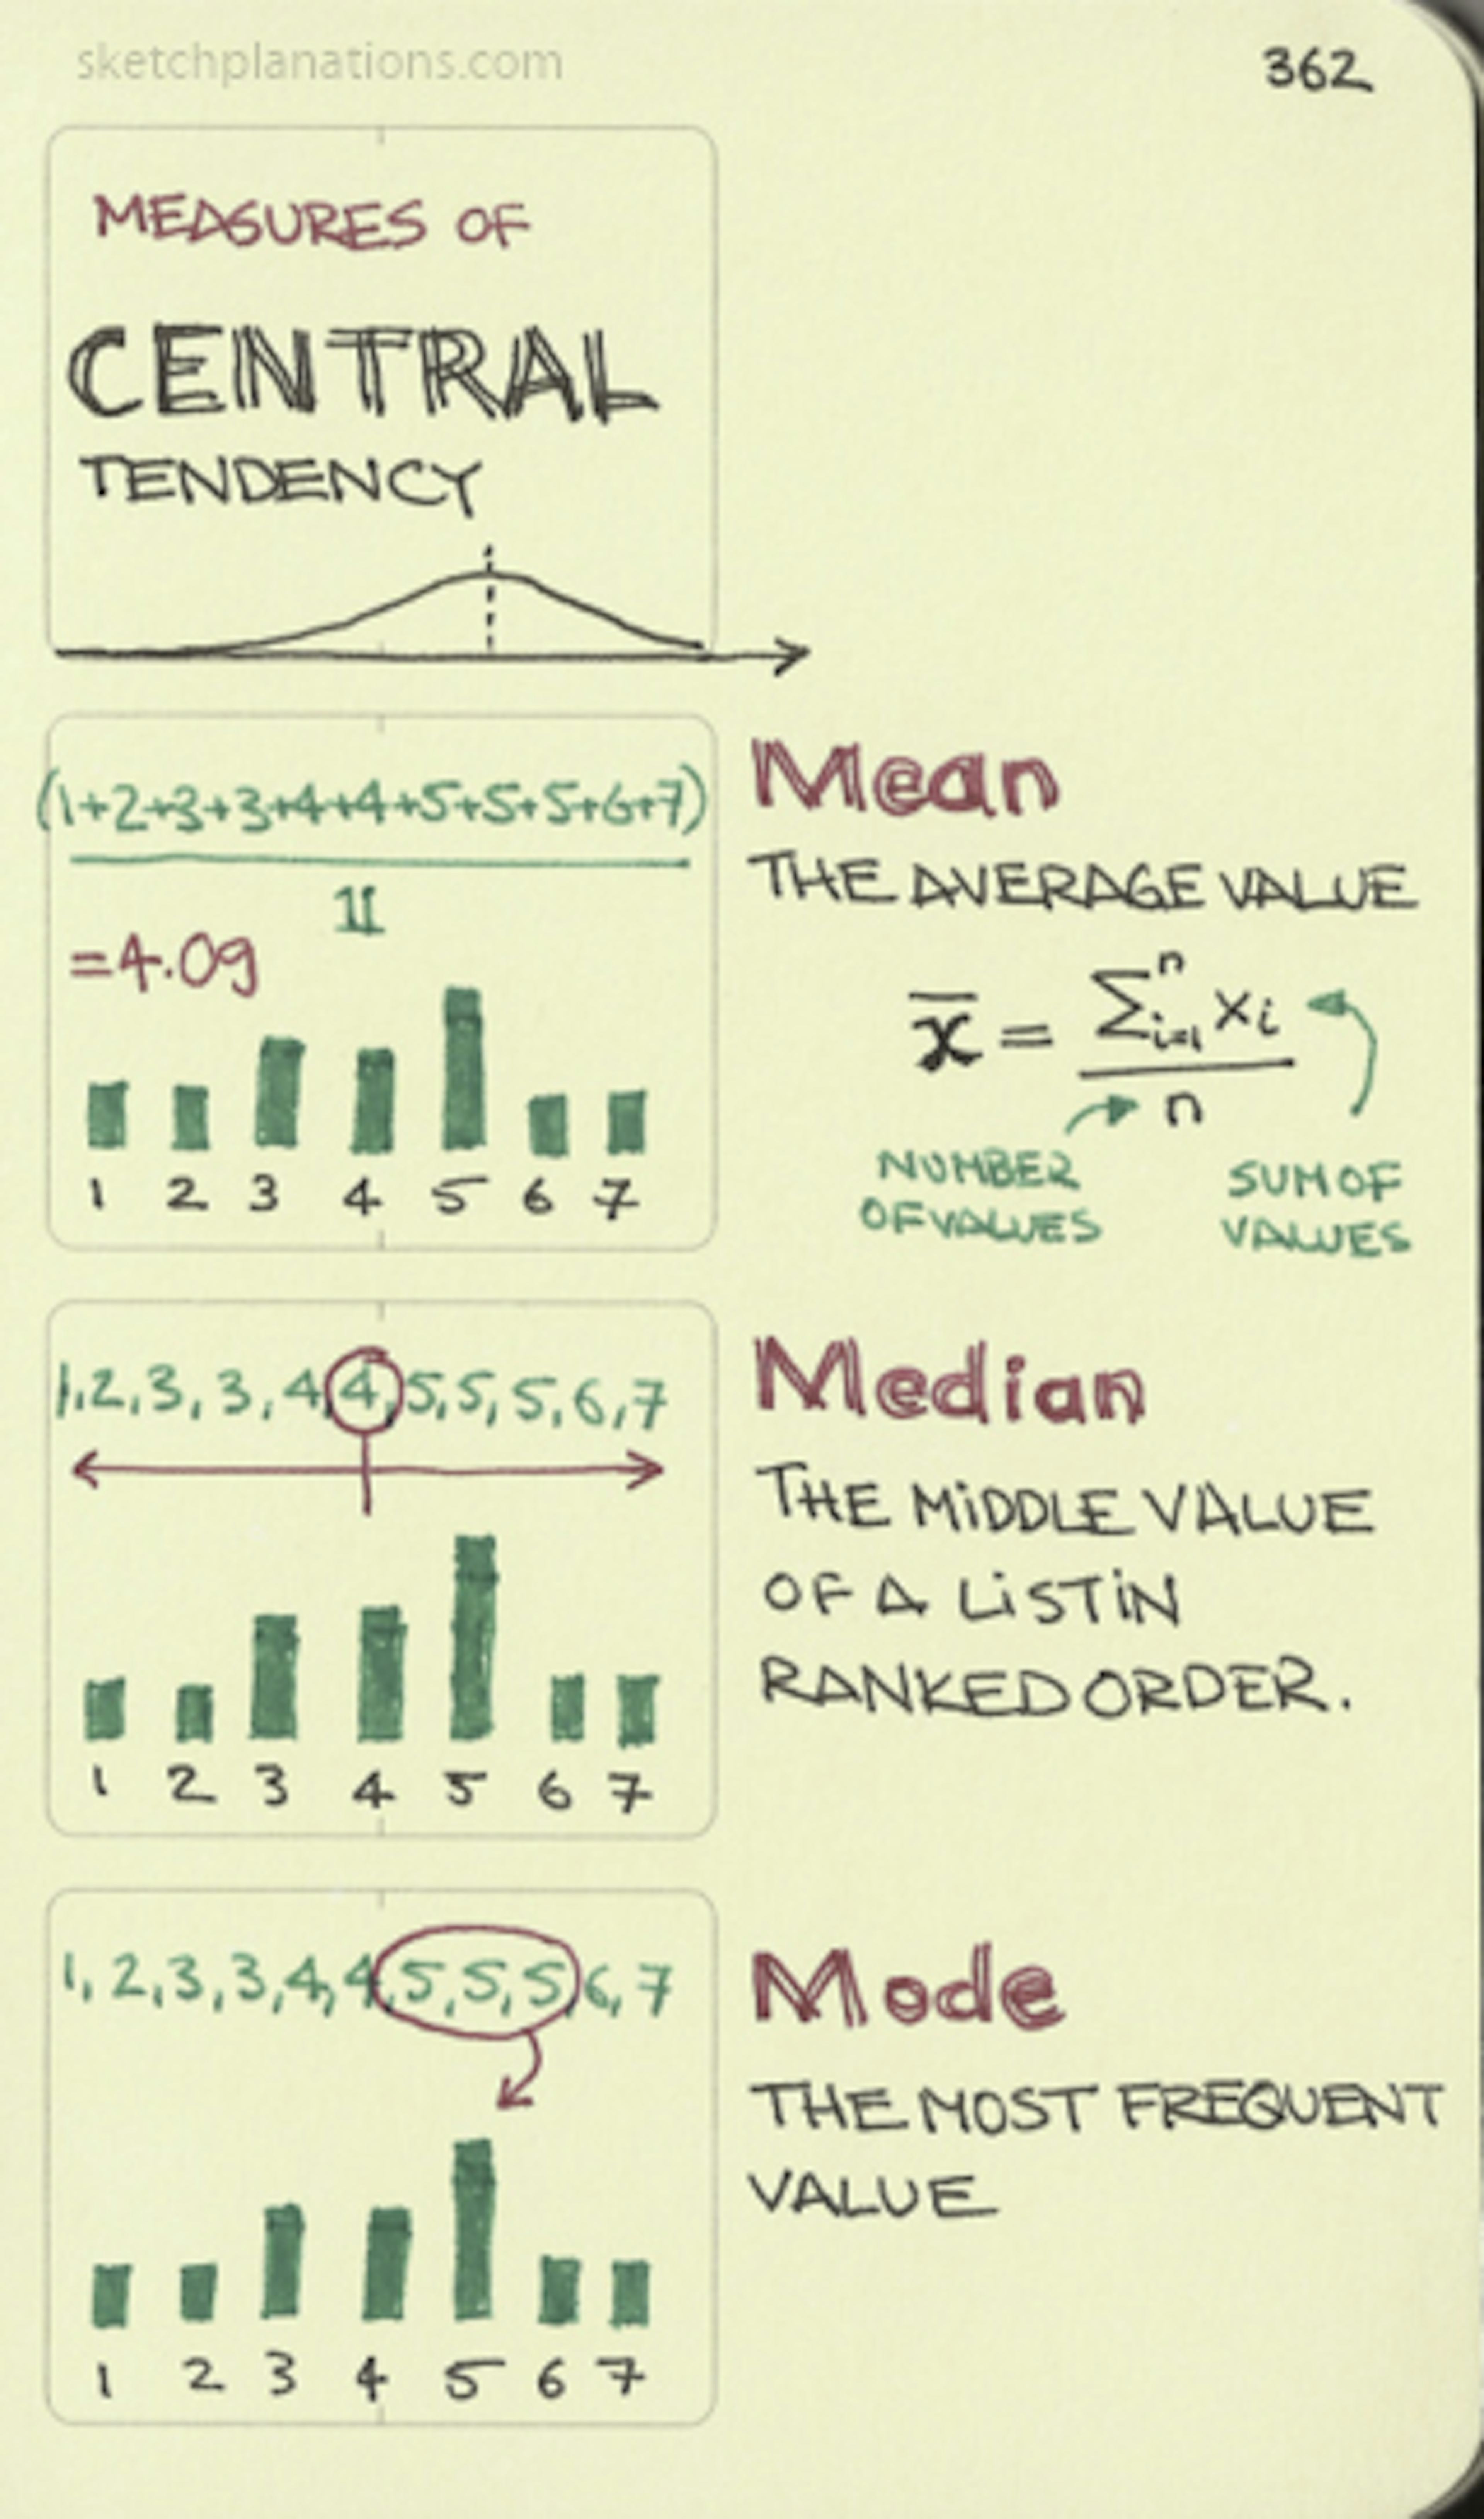 Measures of central tendency: mean, median, mode - Sketchplanations